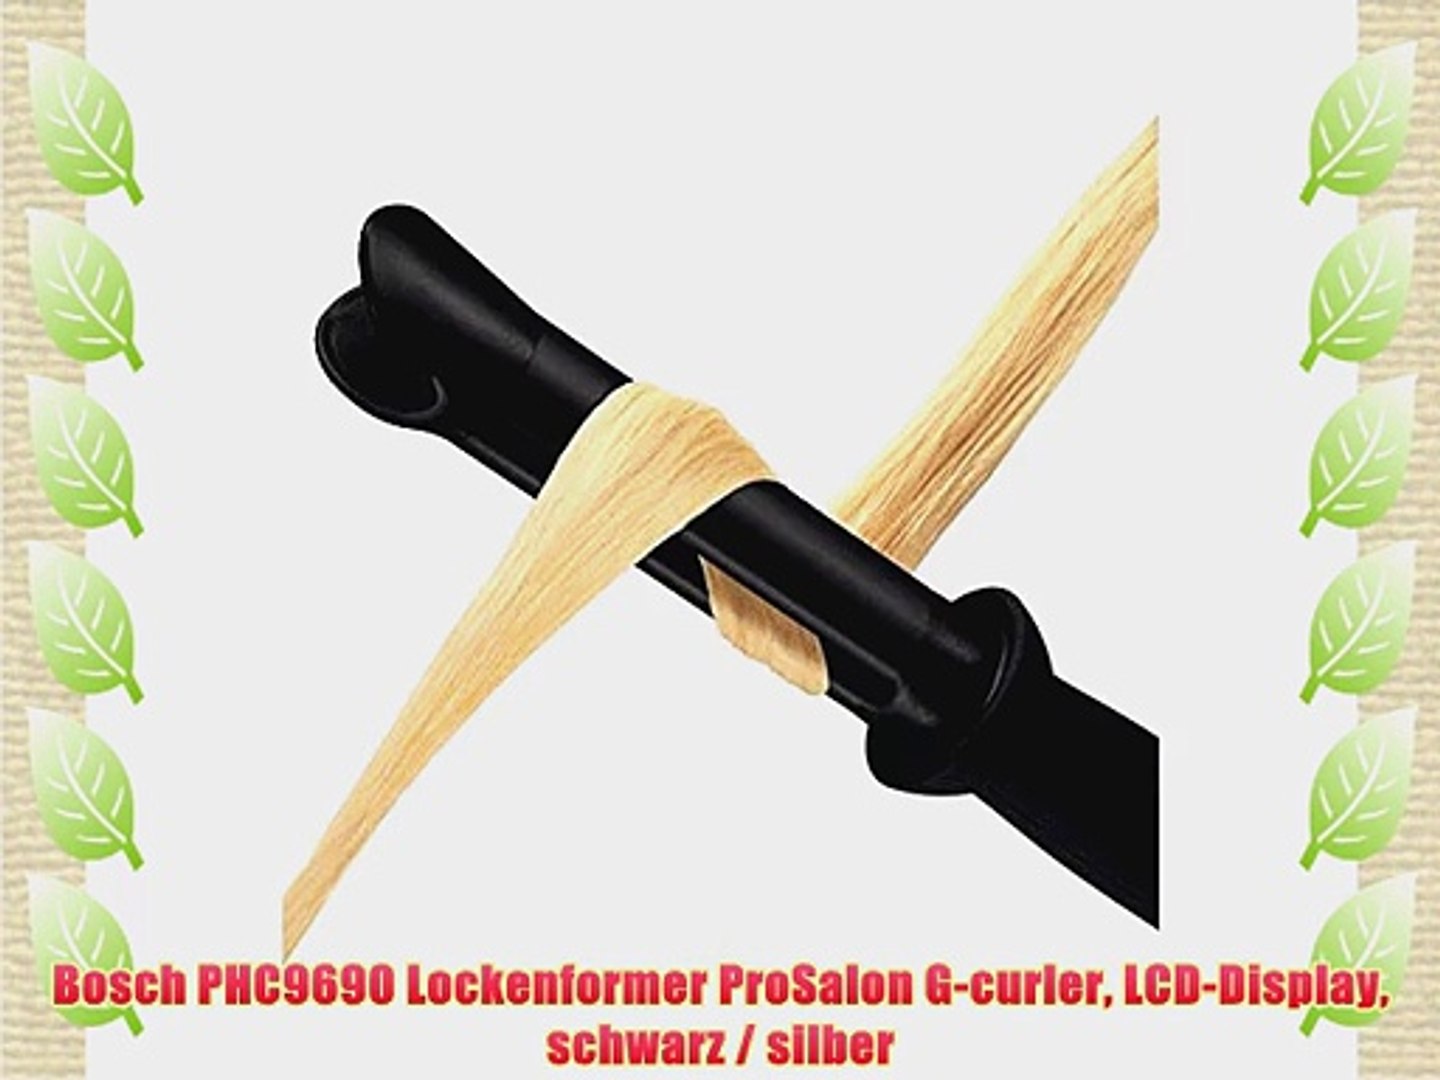 Bosch PHC9690 Lockenformer ProSalon G-curler LCD-Display schwarz / silber -  video Dailymotion